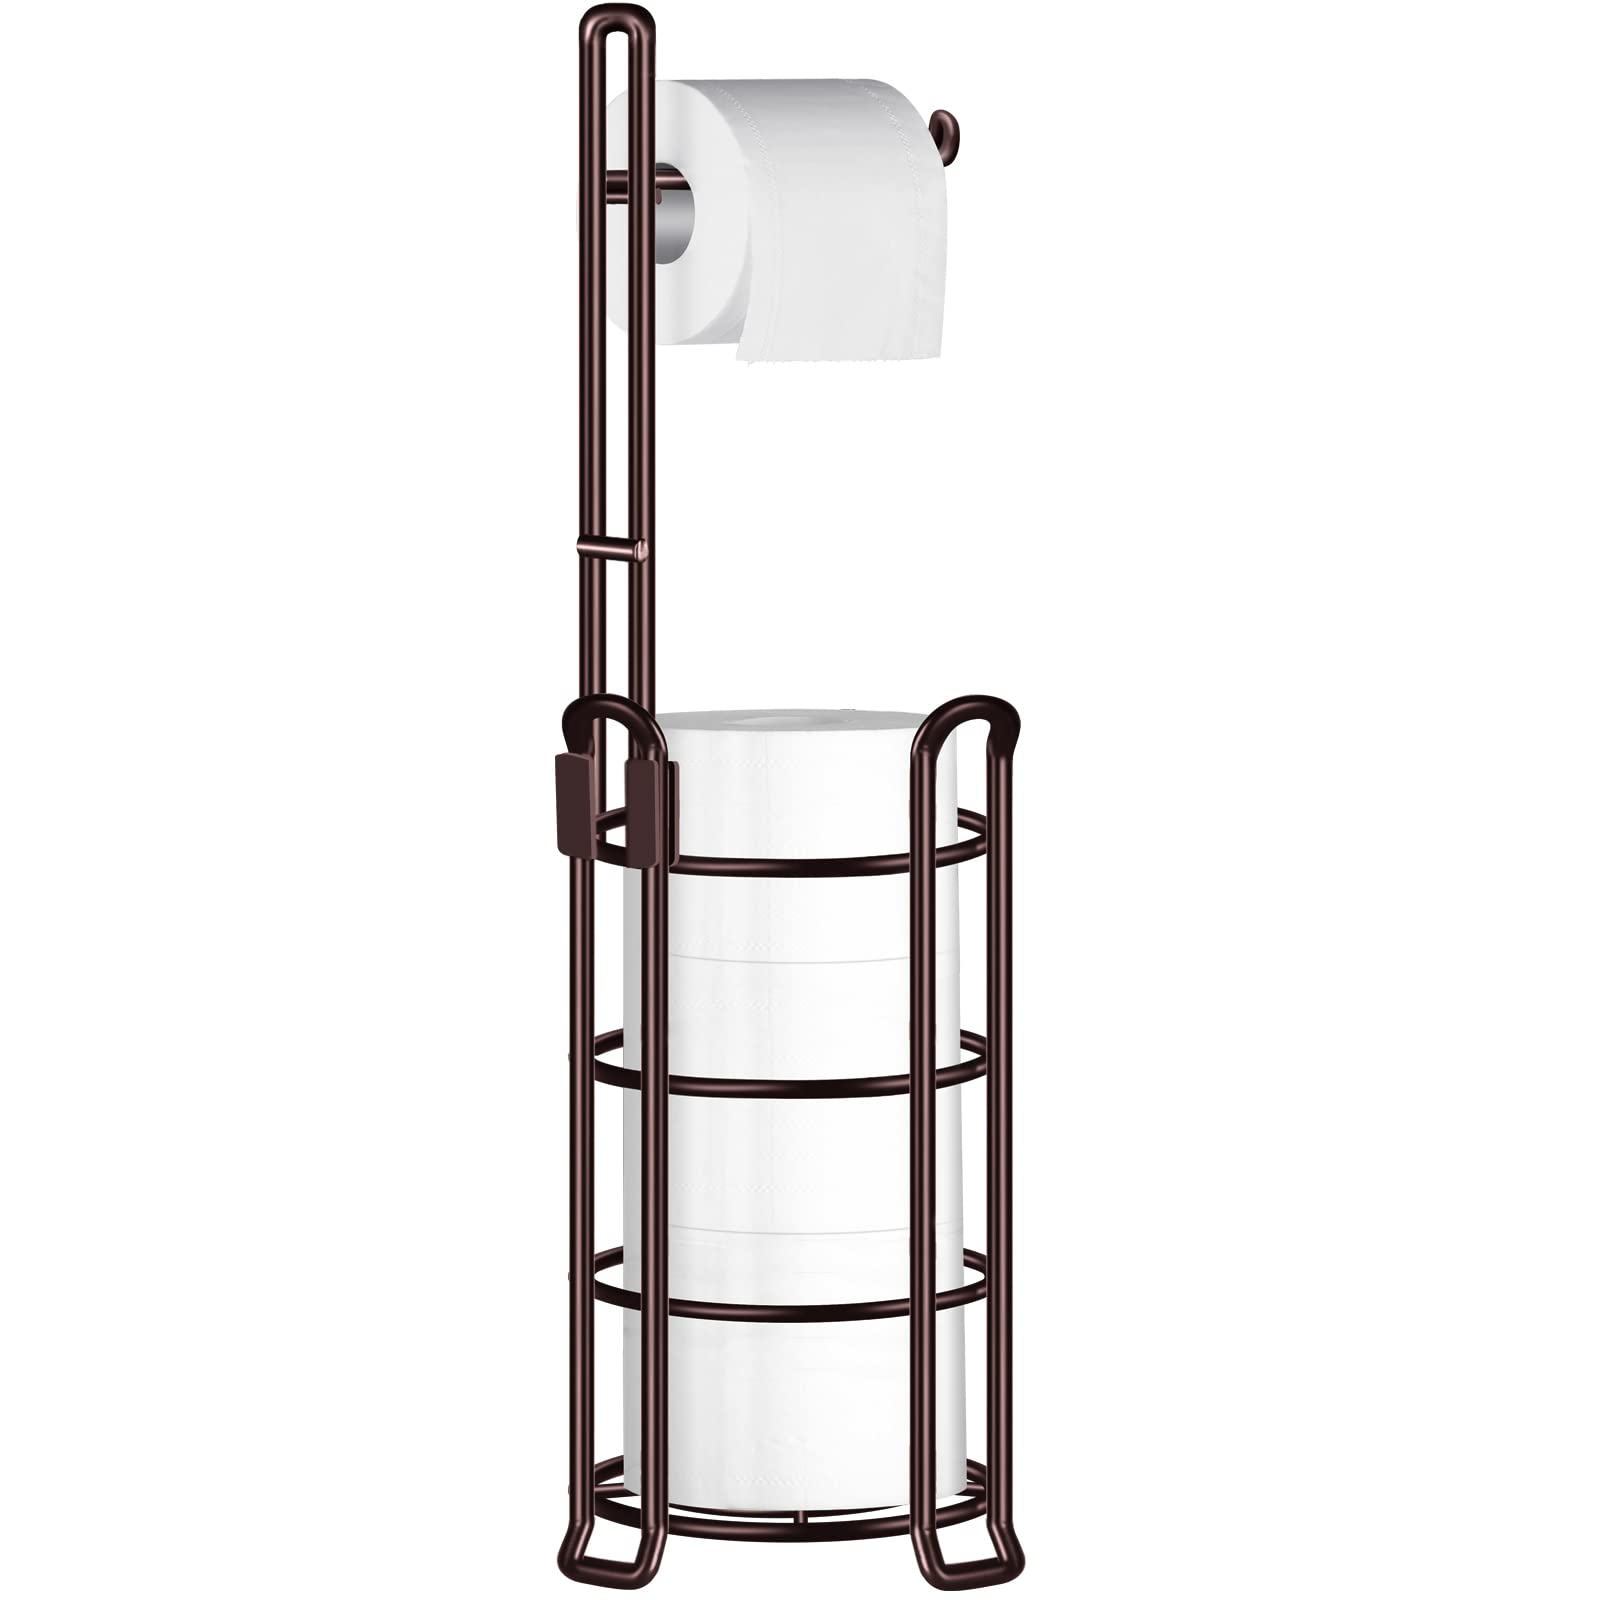 Toilet Paper Holder Stand Free Standing Toilet Paper Roll Dispenser Black  Toilet Paper Stand for Bathroom Toilet Tissue Storage (Metal)